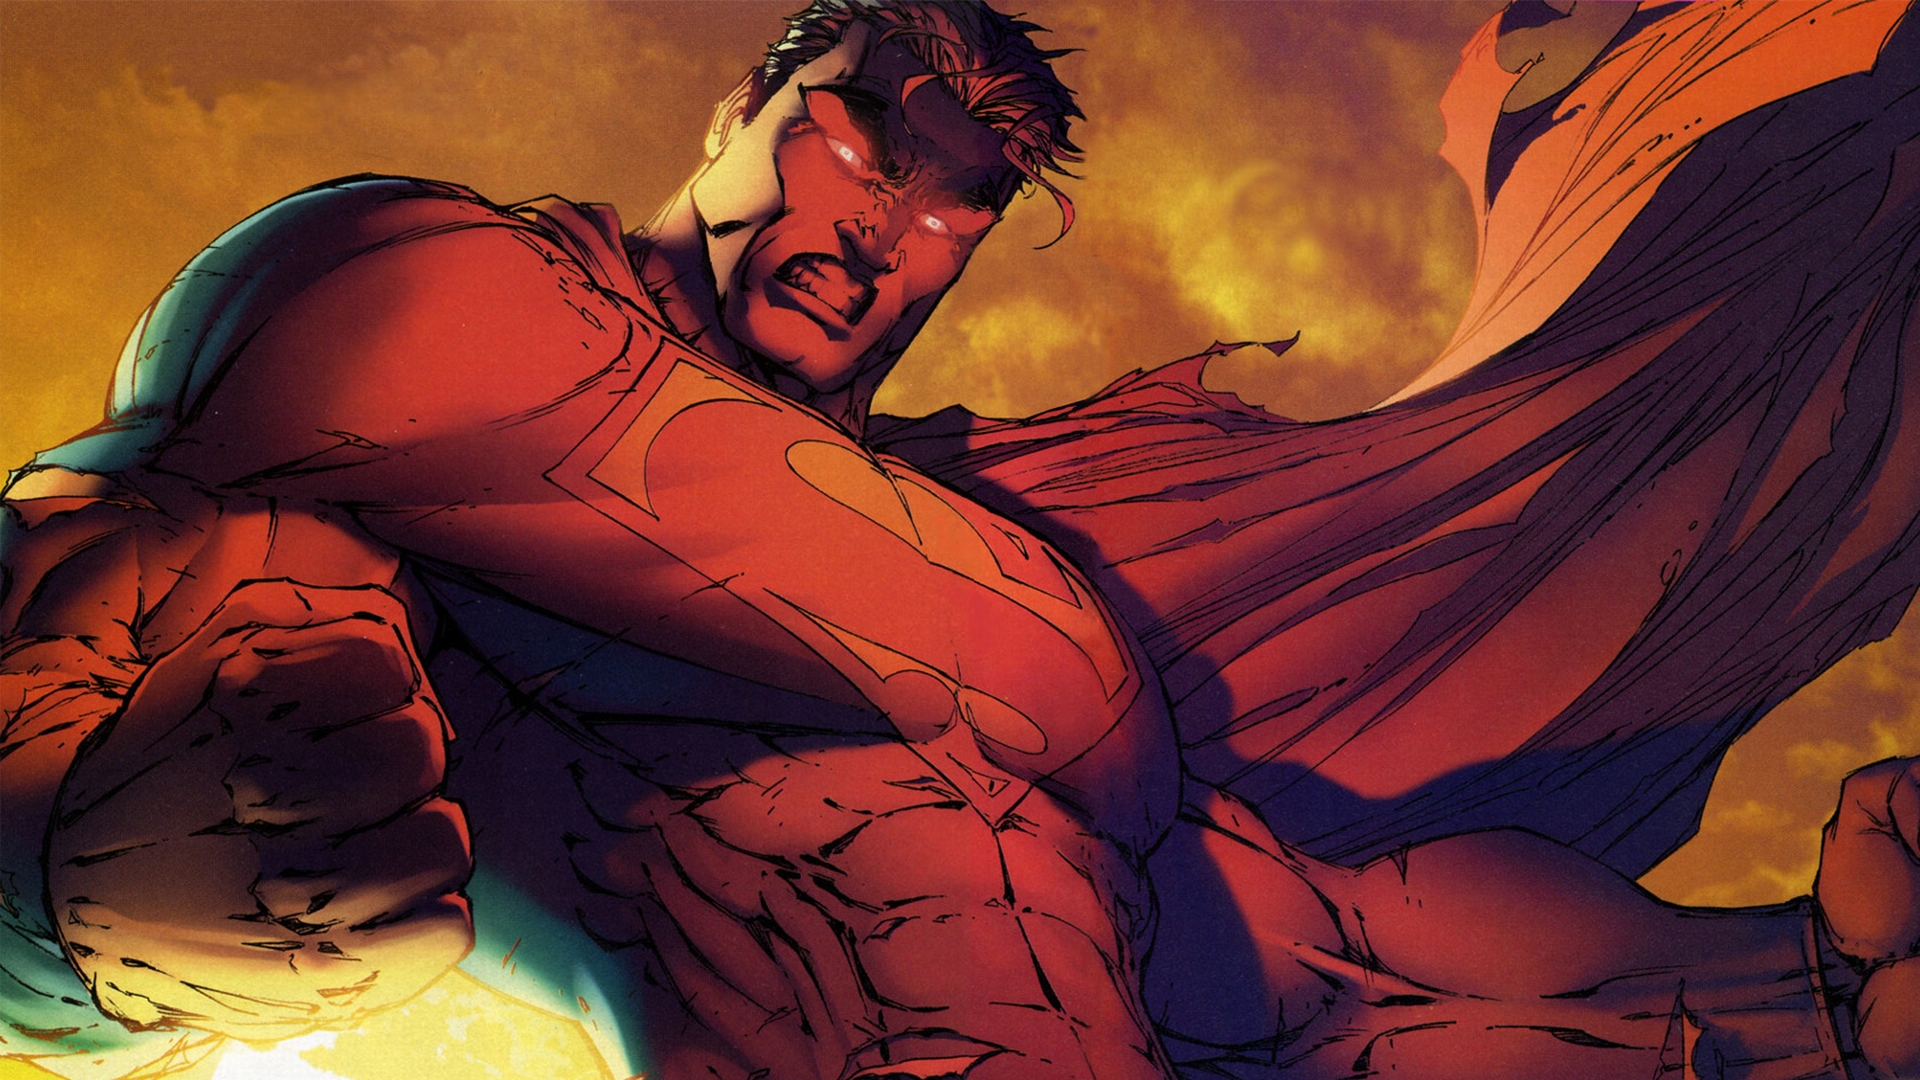 Superman comics superhero wallpapers hd desktop and mobile backgrounds